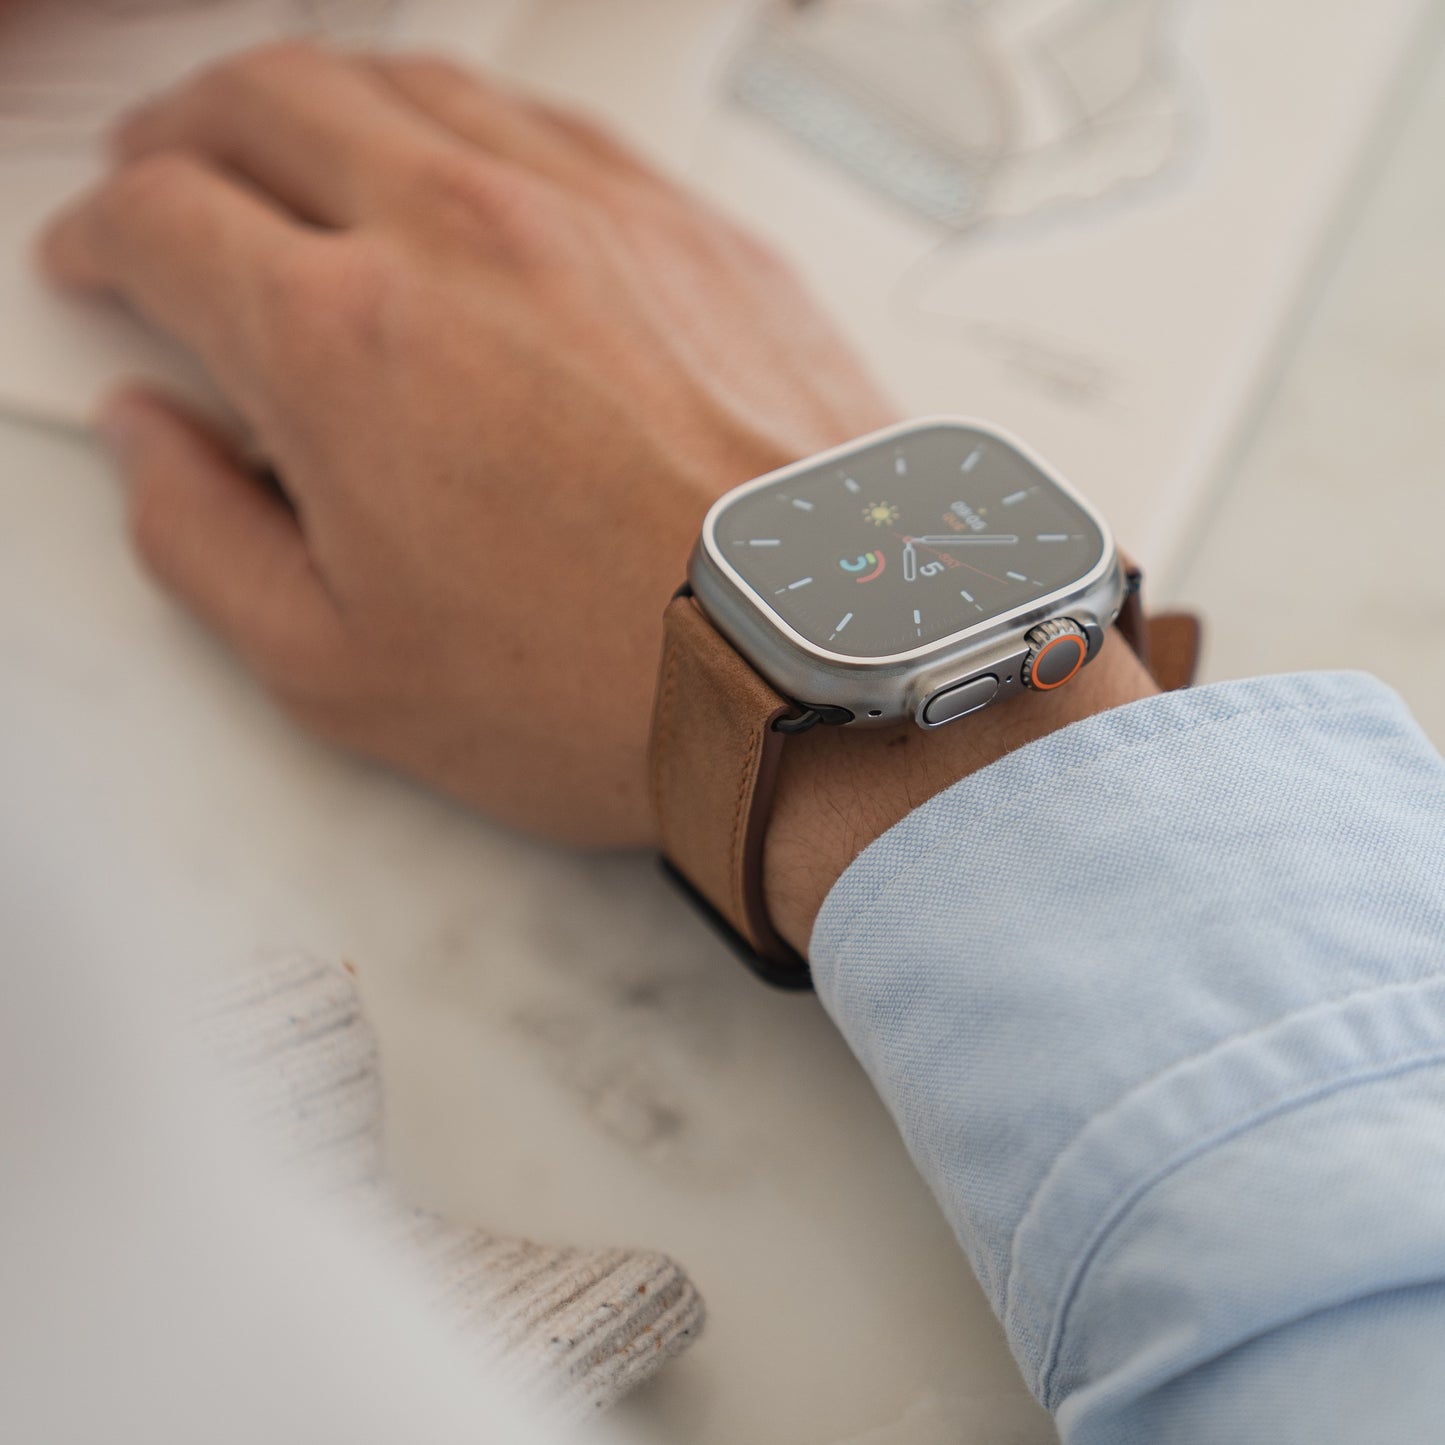 Mobiletto Apple Watch Ultra Lederarmband